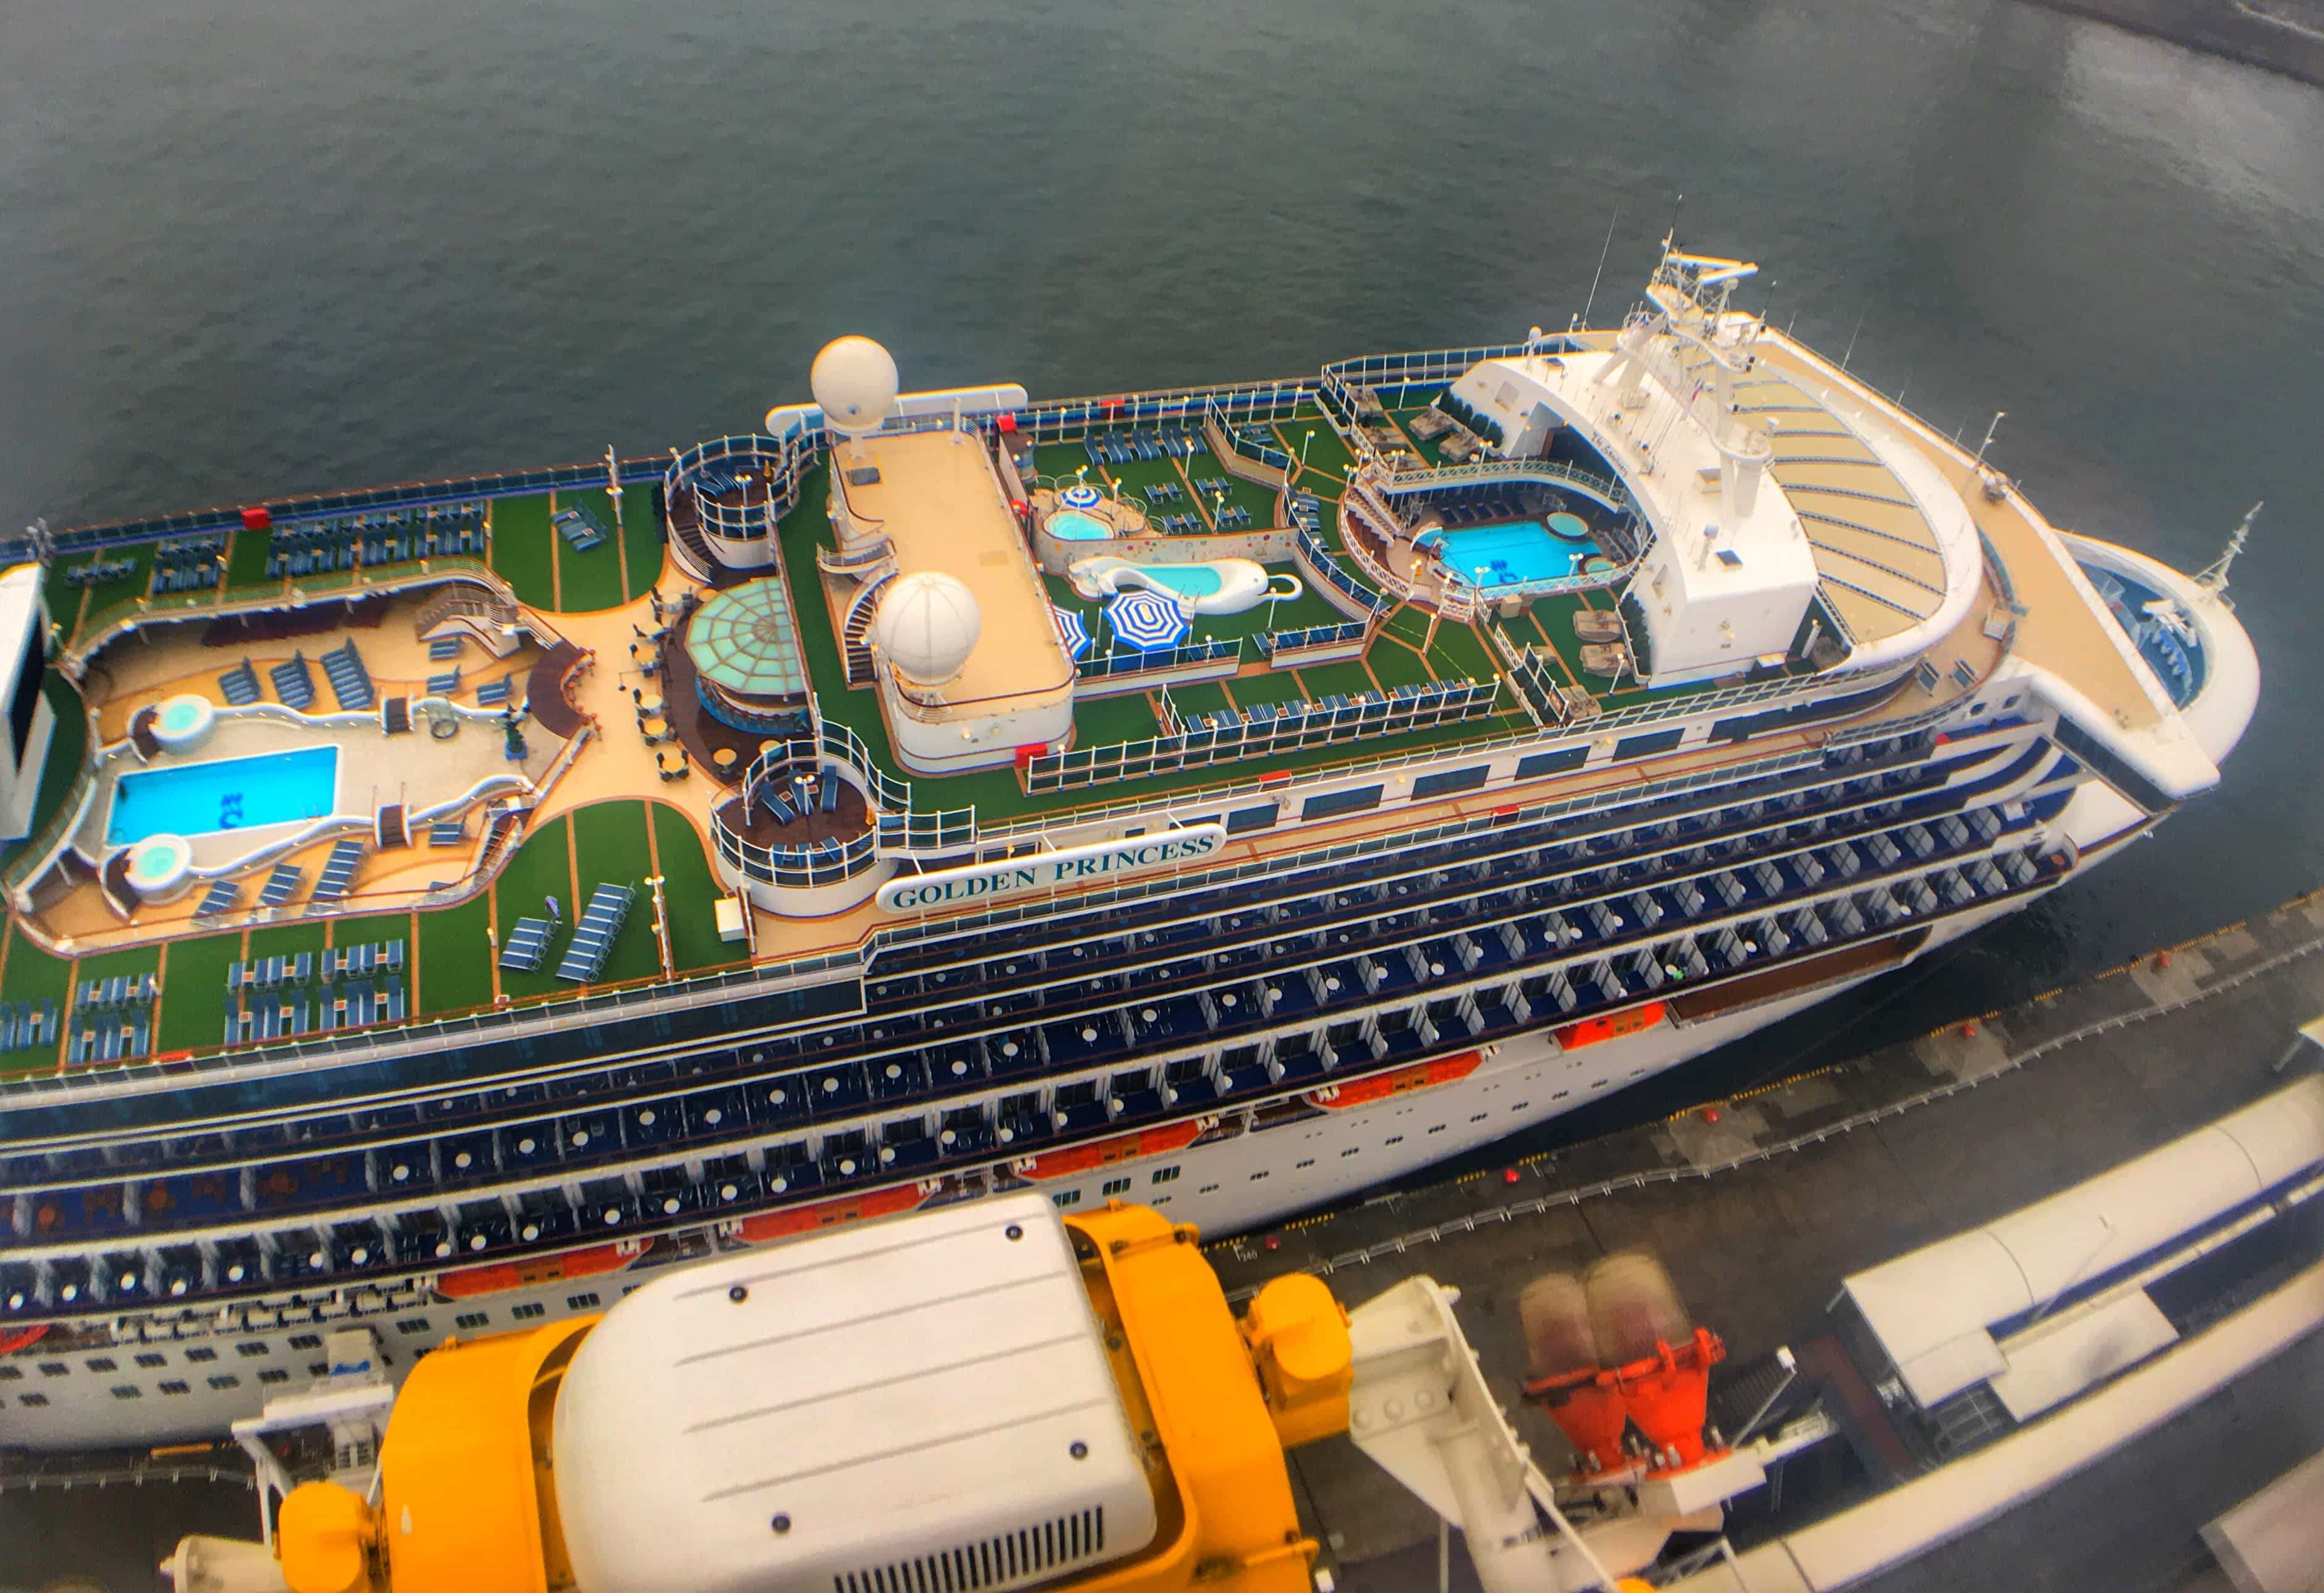 Golden princess Cruise ship aerial view swimming pools top decks green grass carpet 